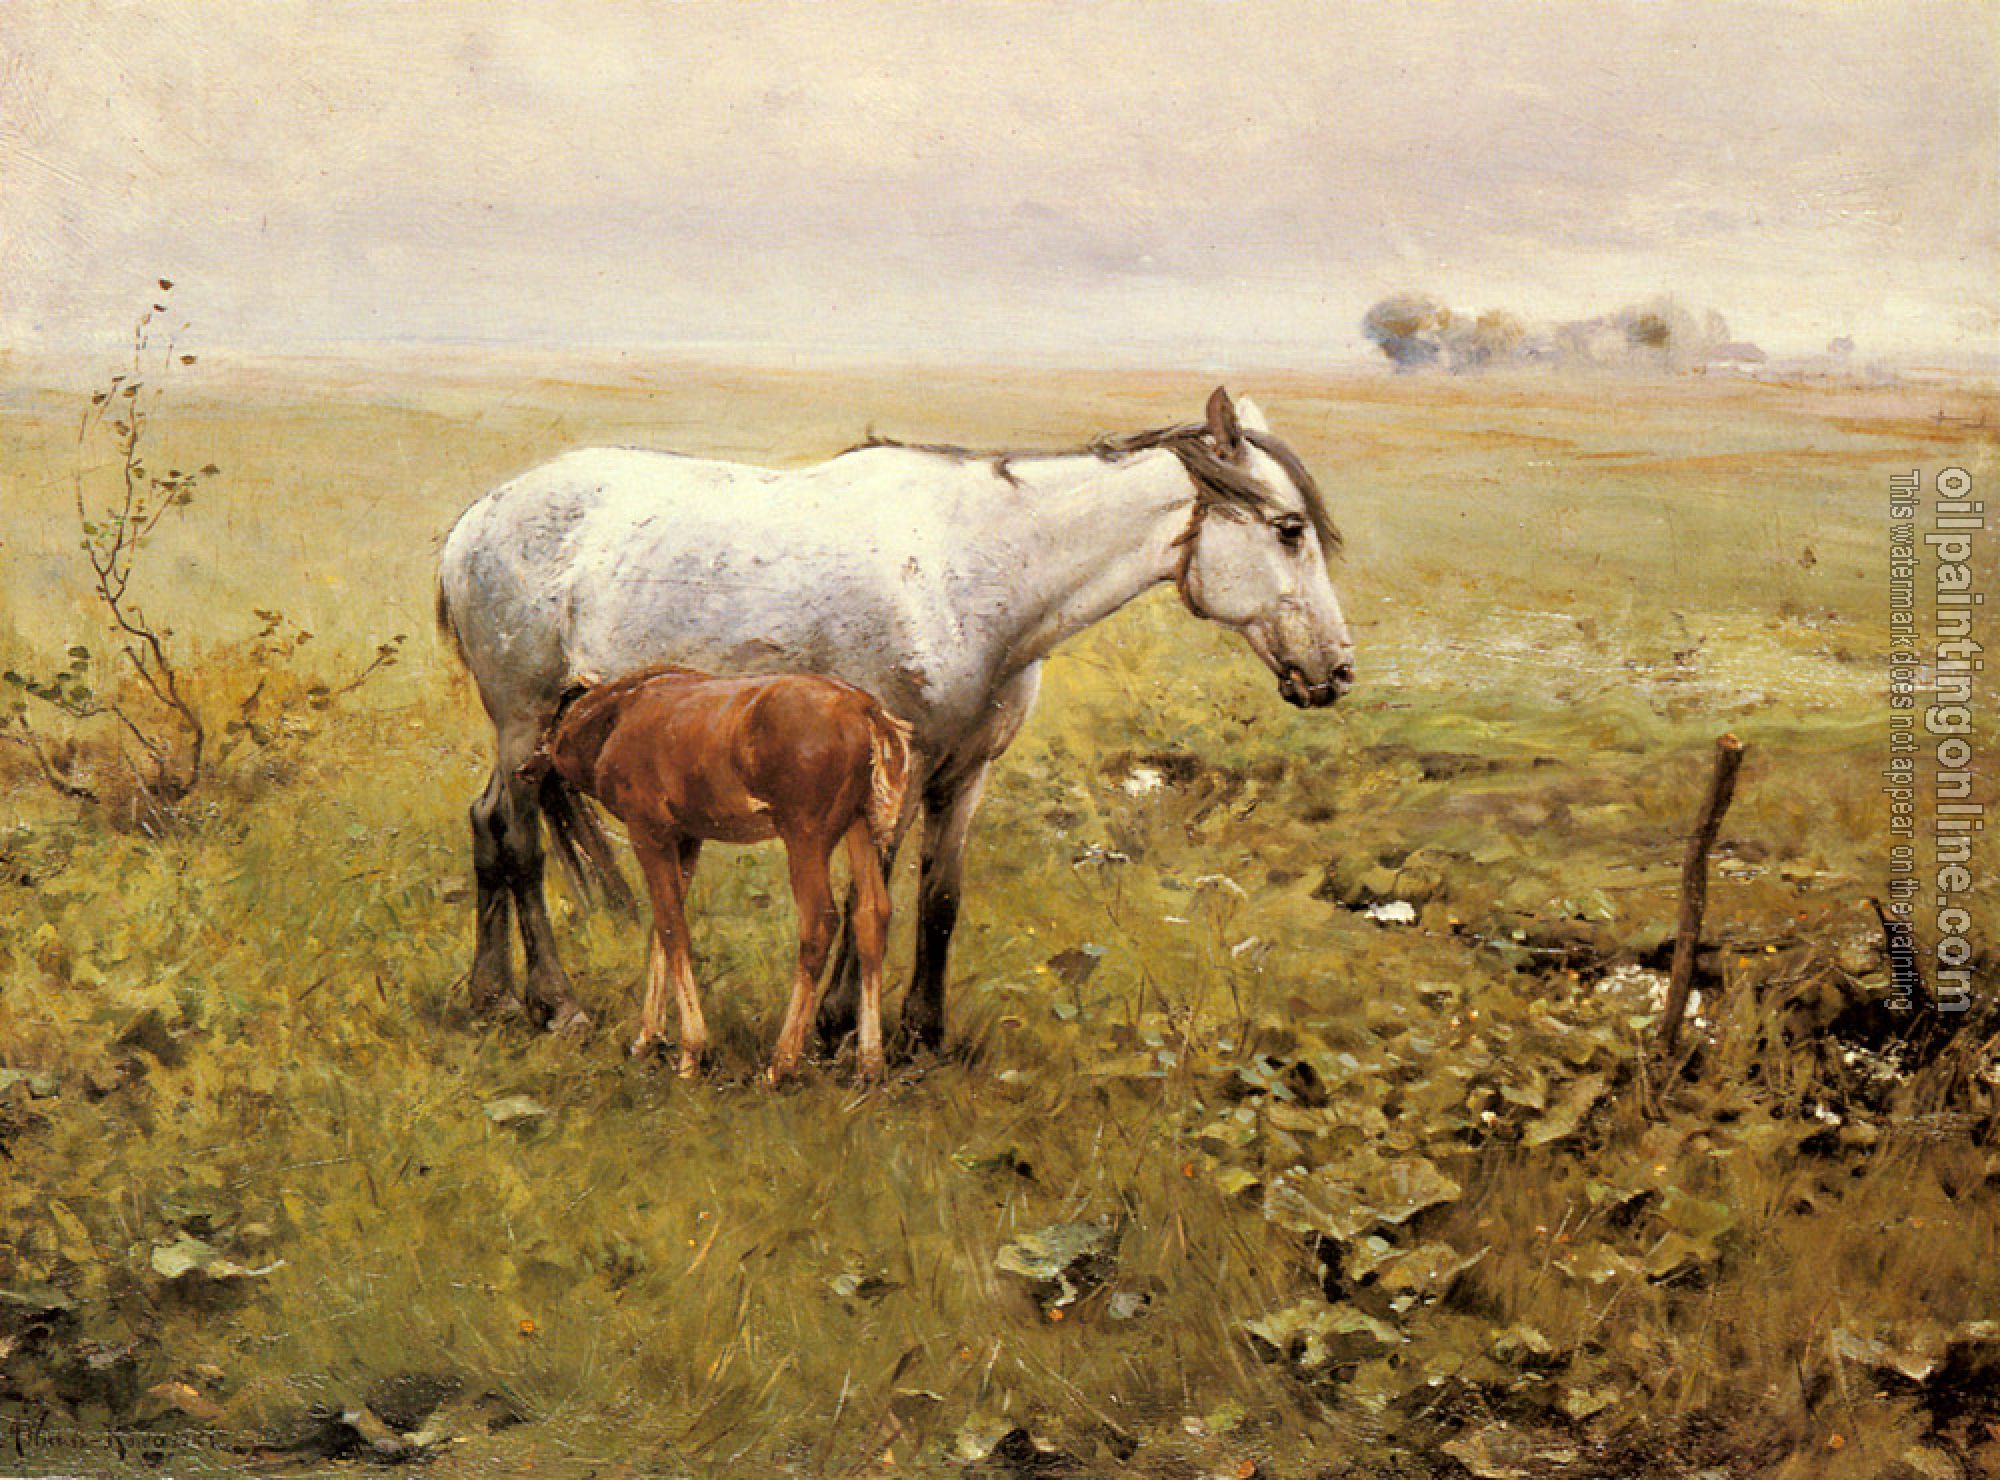 Wierusz-Kowalski, Alfred von - A Mare and her Foal in a Landscape